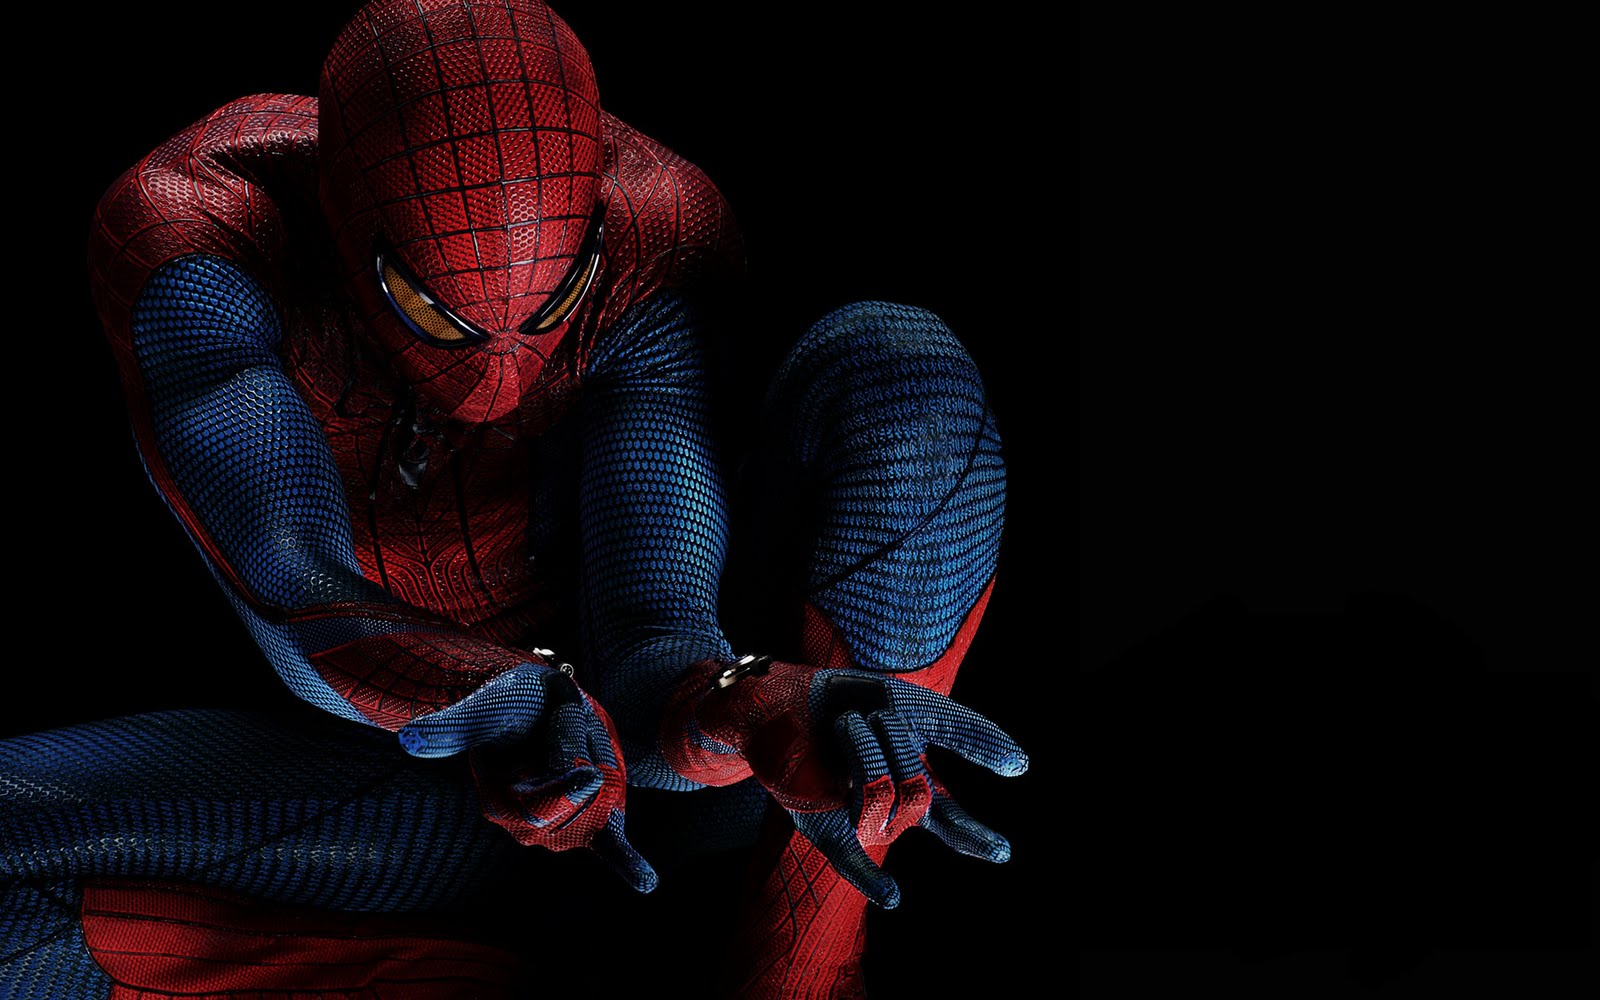 https://blogger.googleusercontent.com/img/b/R29vZ2xl/AVvXsEgEJwBfLeFVTBk6tkx9EhxIQQ5wuGGpCQ9f49zi0Dxk6asfs4xOWk3sRPwCQ8Azt2raKQjvcOiVIbceMpg89FKOUnGhDBR4u8cKMU4WlqhAq5lIw2FrM5pRF4_LlRmR3bFYbLZFF7Uh0FjG/s1600/The-Amazing-Spider-Man-2012-Wallpaper-HD-spiderman-spiderman-spider-man.jpg